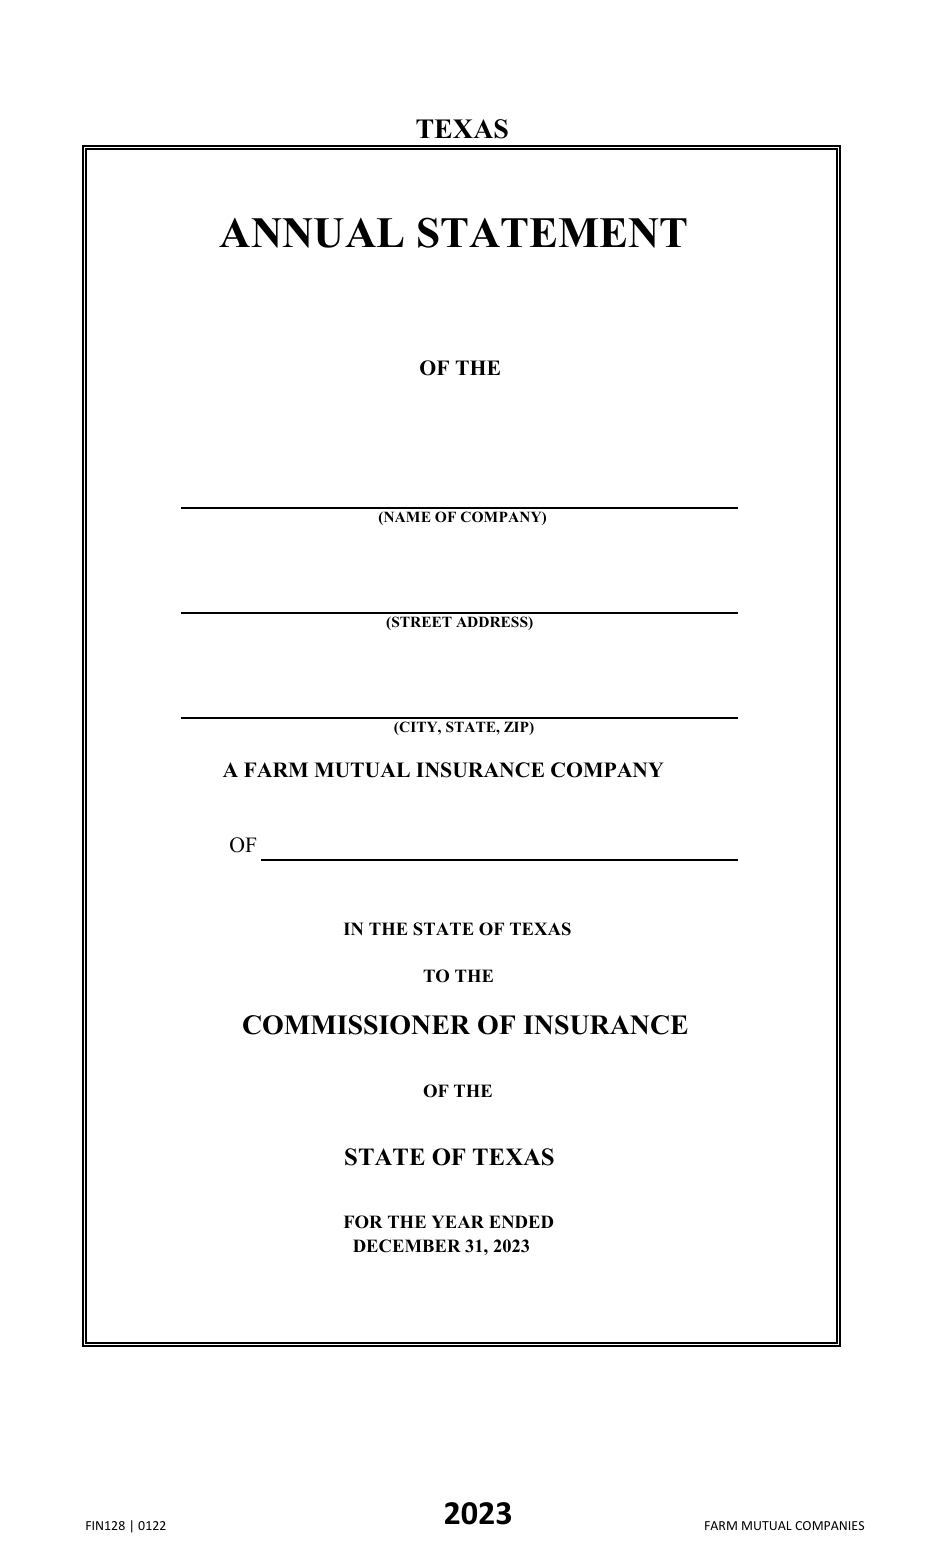 Form FIN128 Annual Statement - Farm Mutual Companies - Texas, Page 1